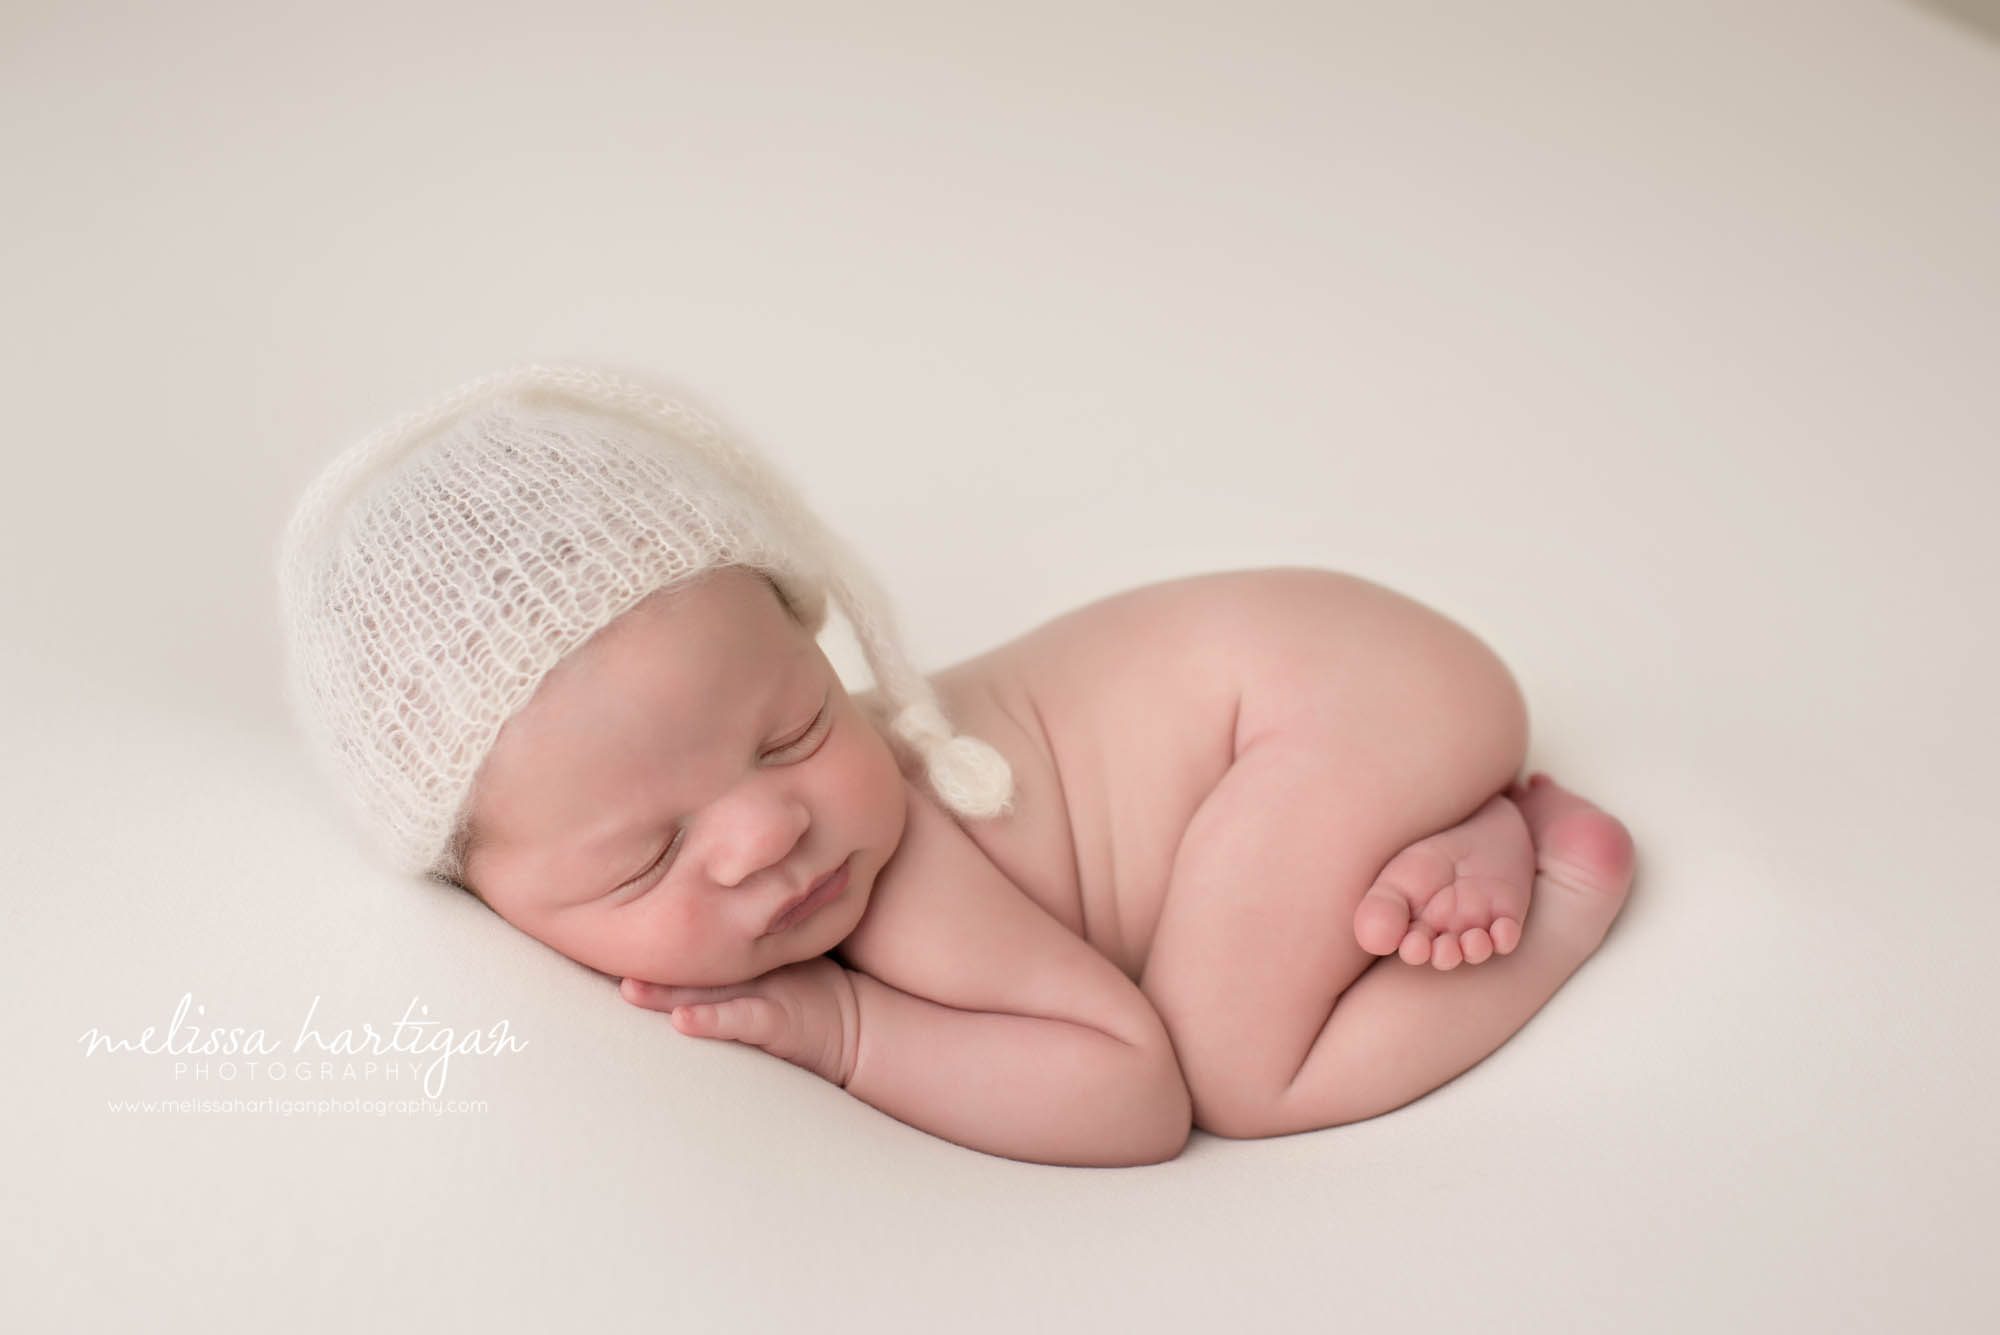 newborn baby boy posed on tummy on cream backdrop wearing knitted cream sleepy cap